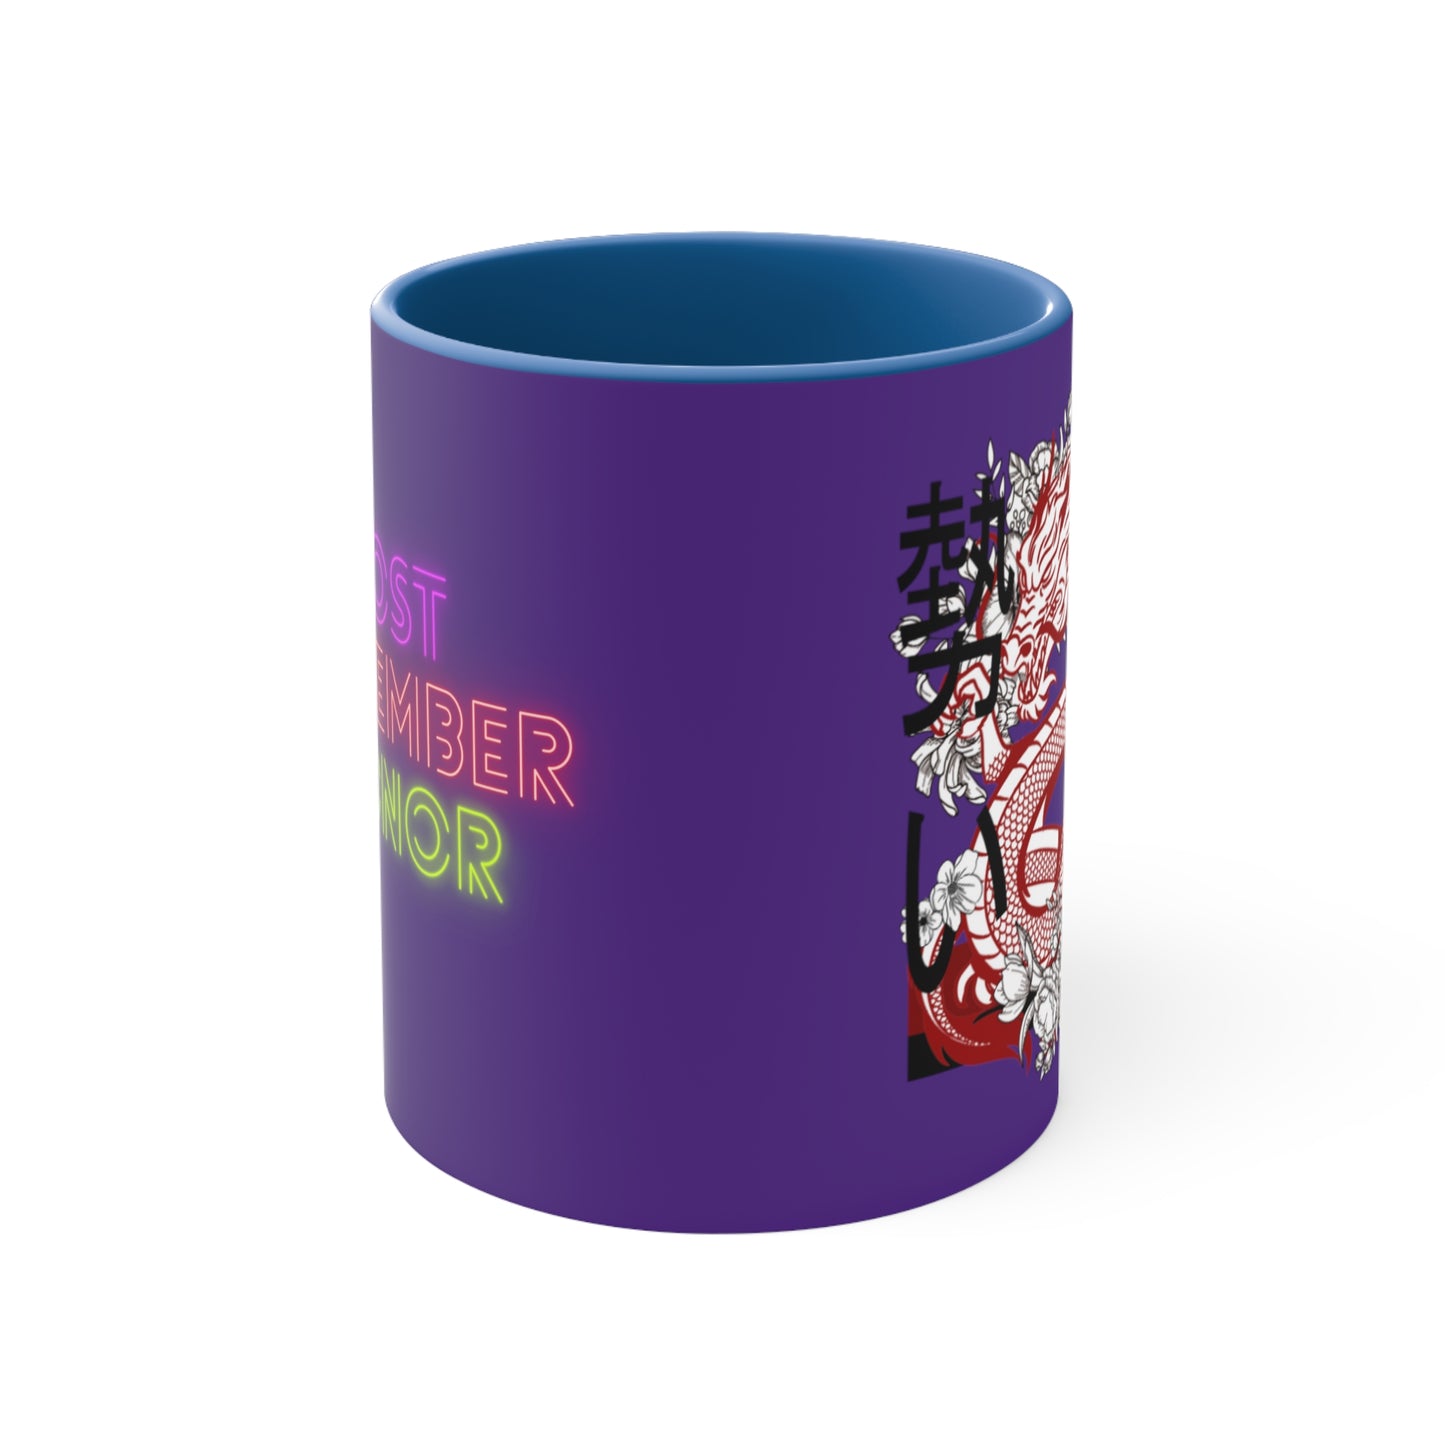 Accent Coffee Mug, 11oz: Dragons Purple